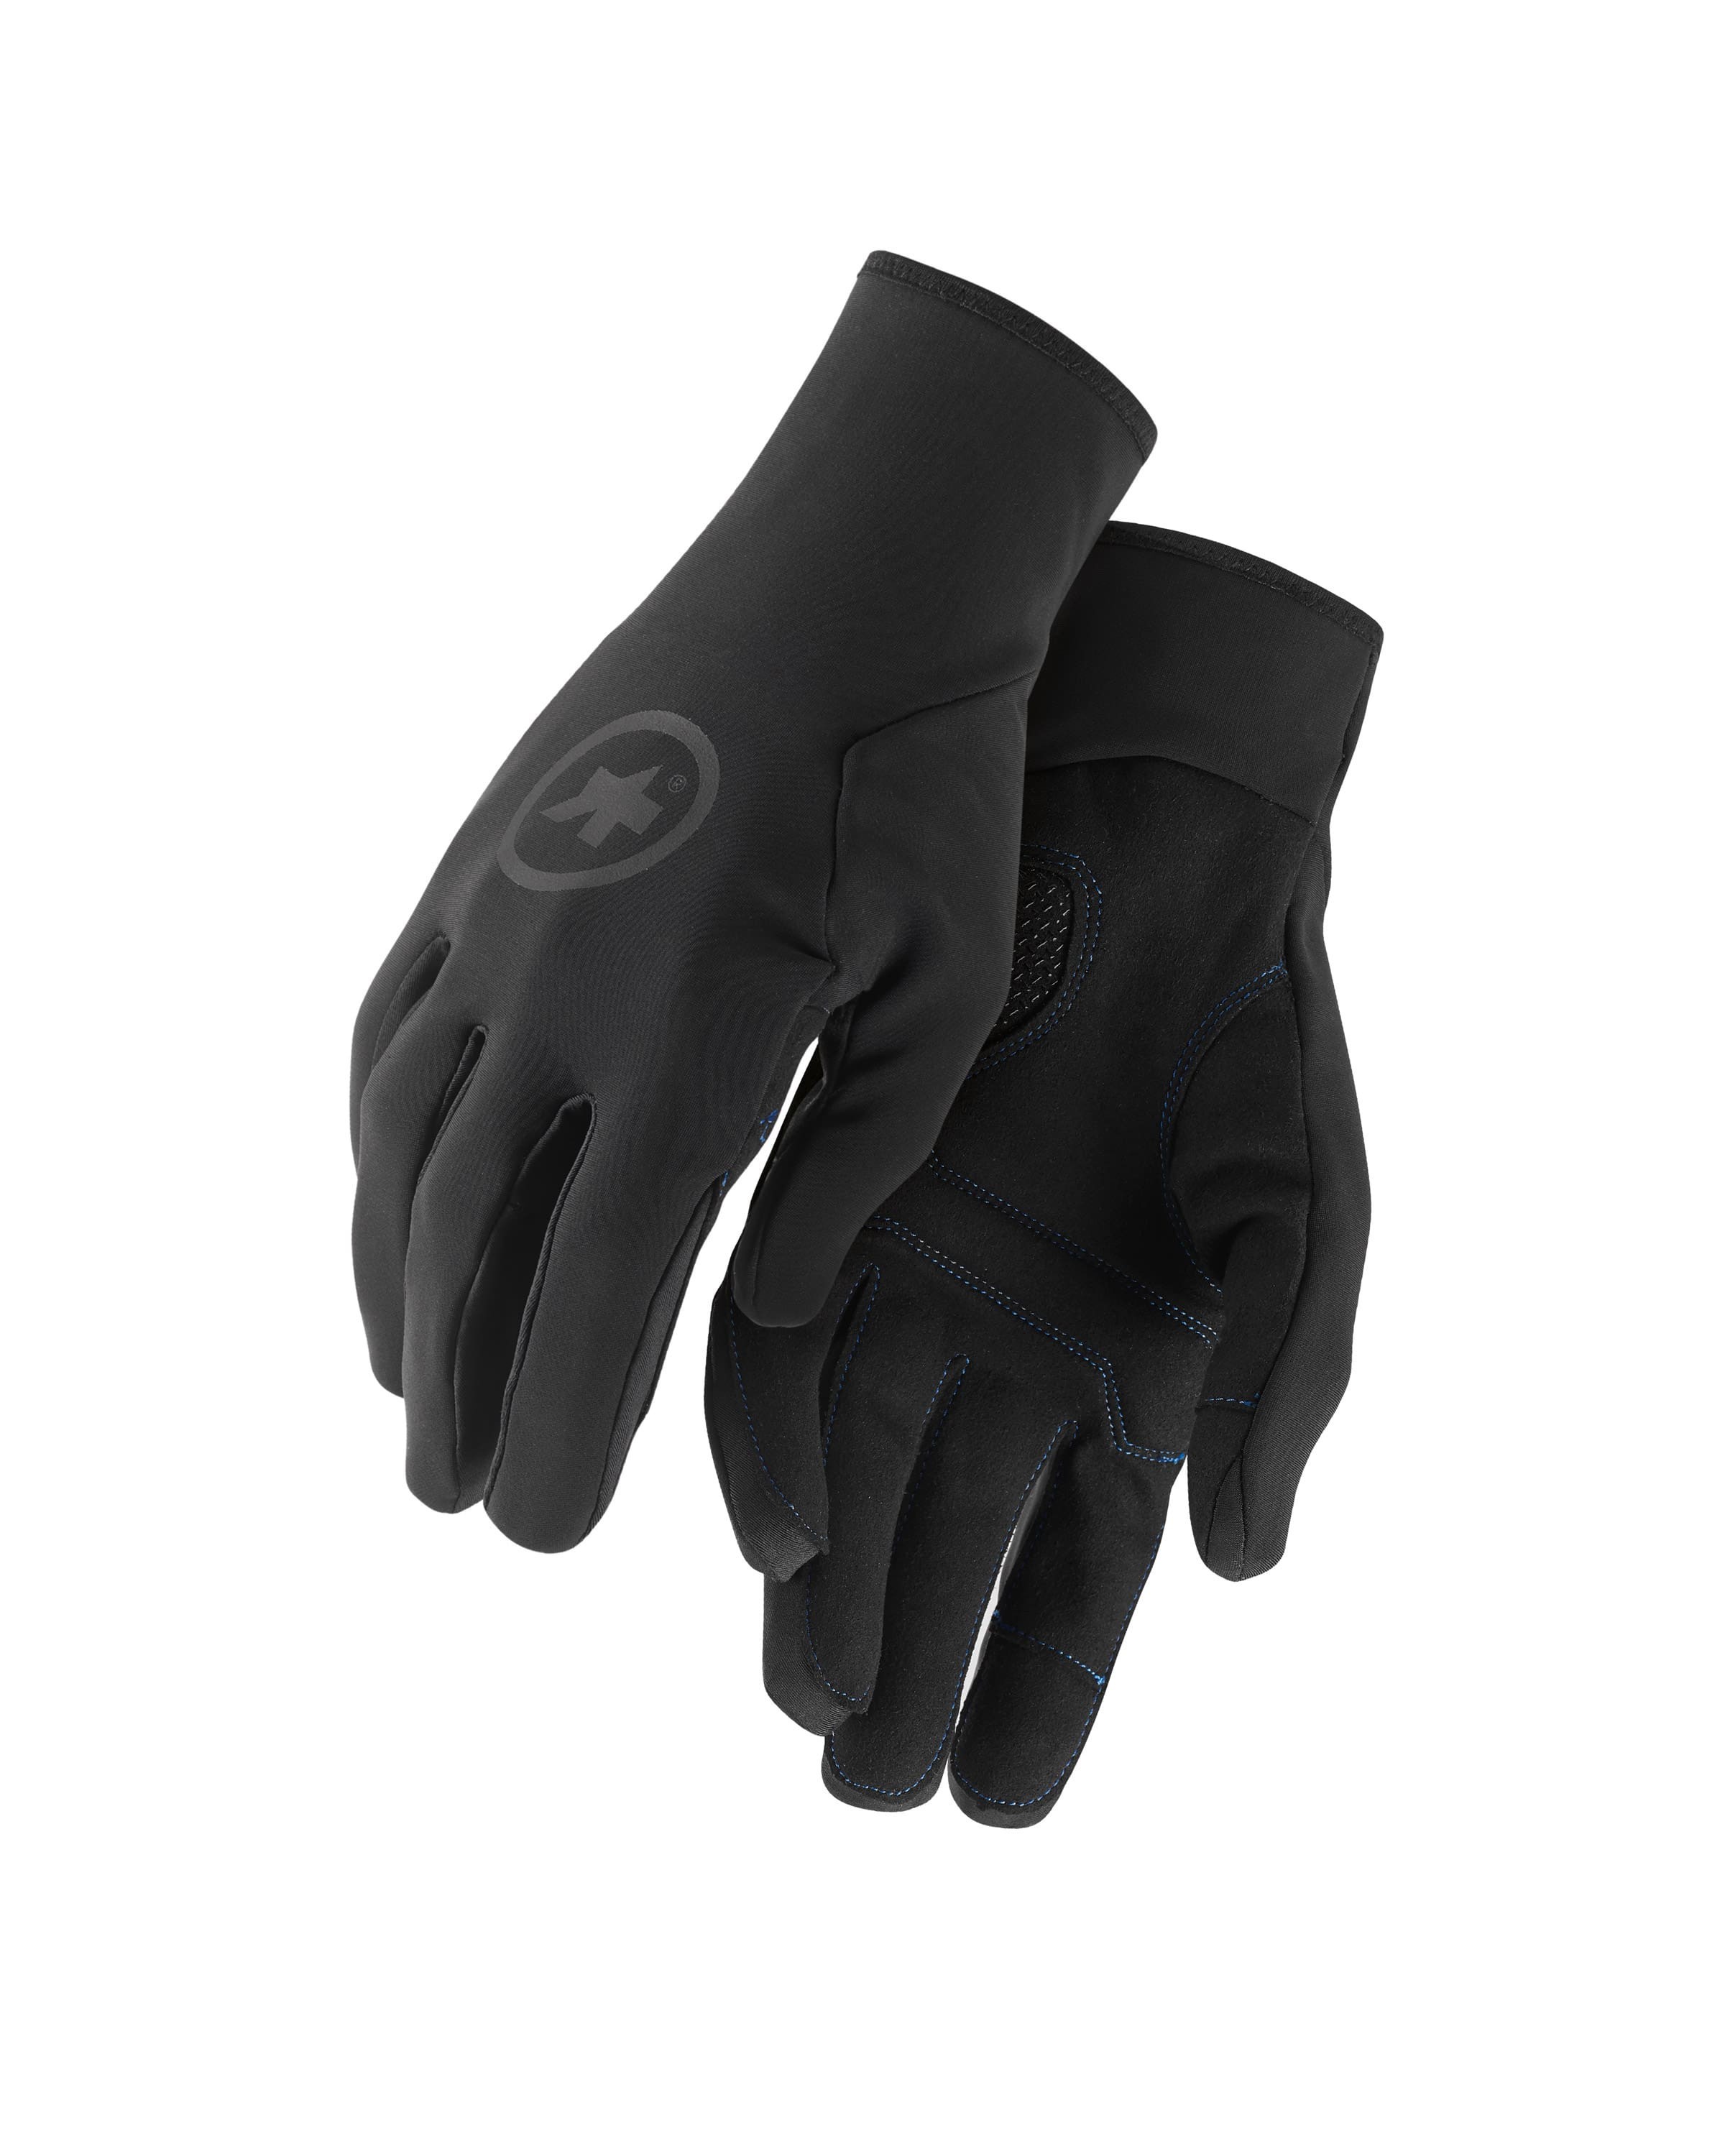 Assos winter gants de cyclisme blackseries noir